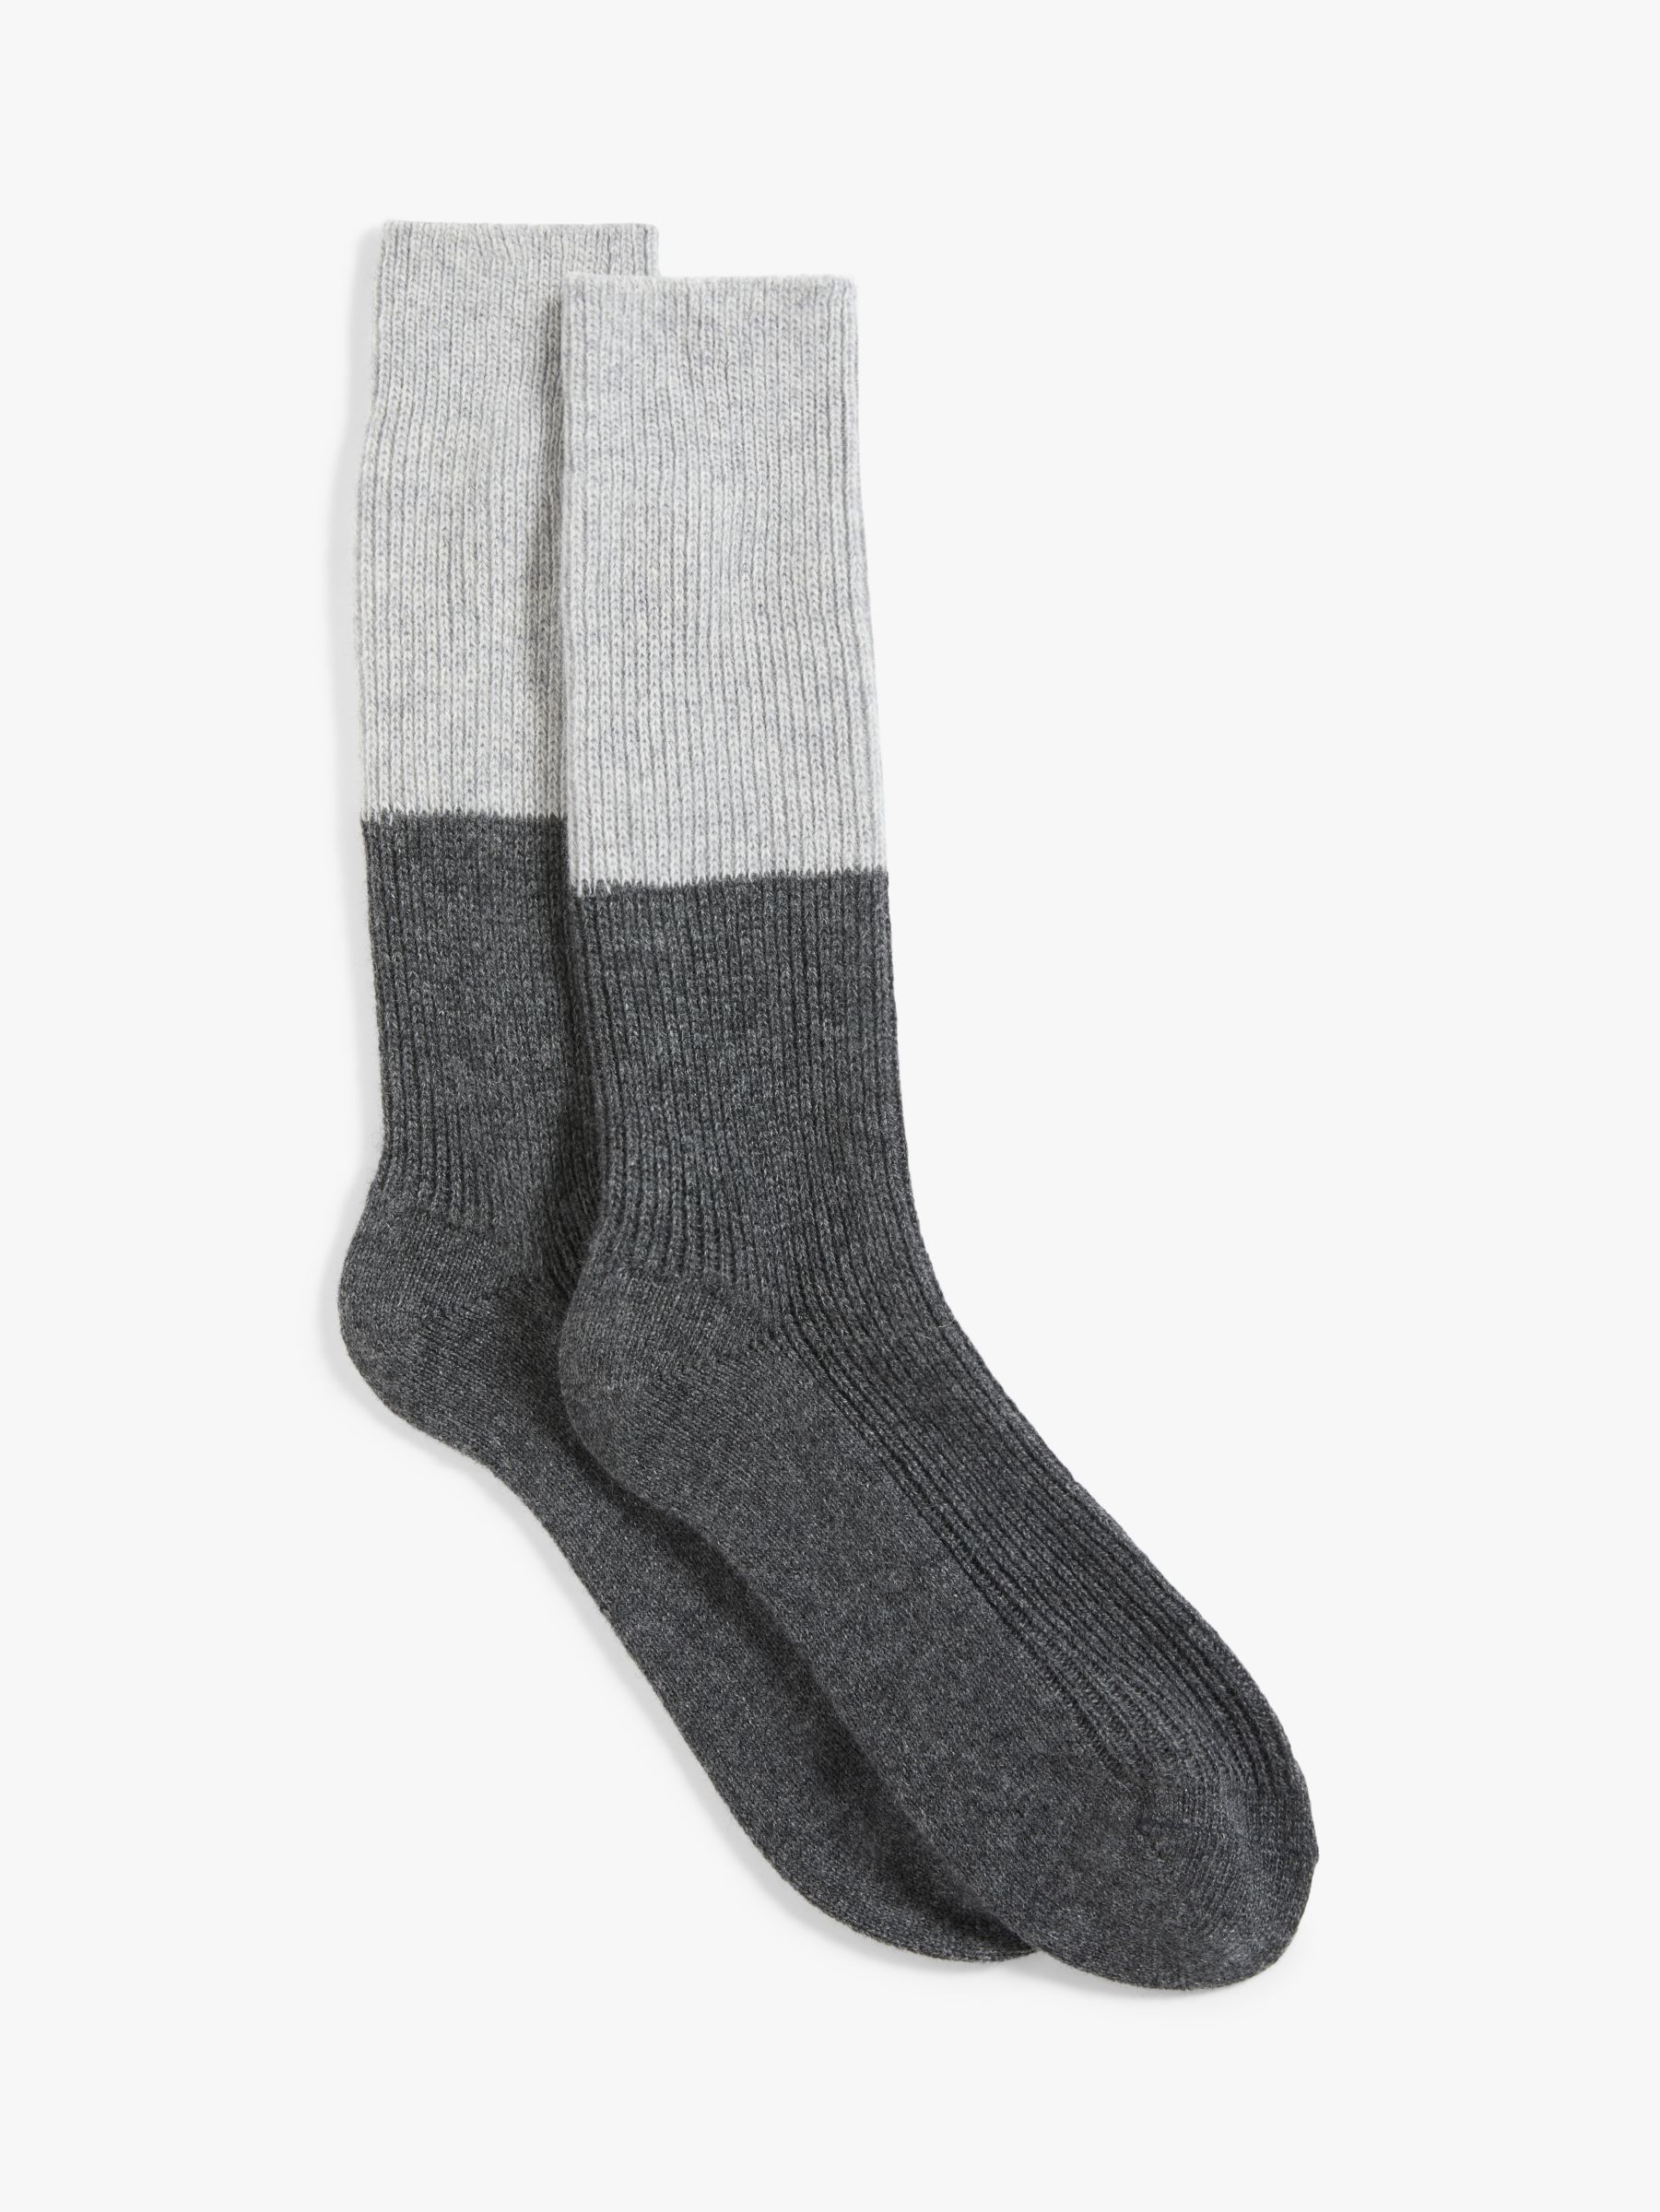 John Lewis & Partners Women's Cashmere Colour Block Socks, Grey/Navy